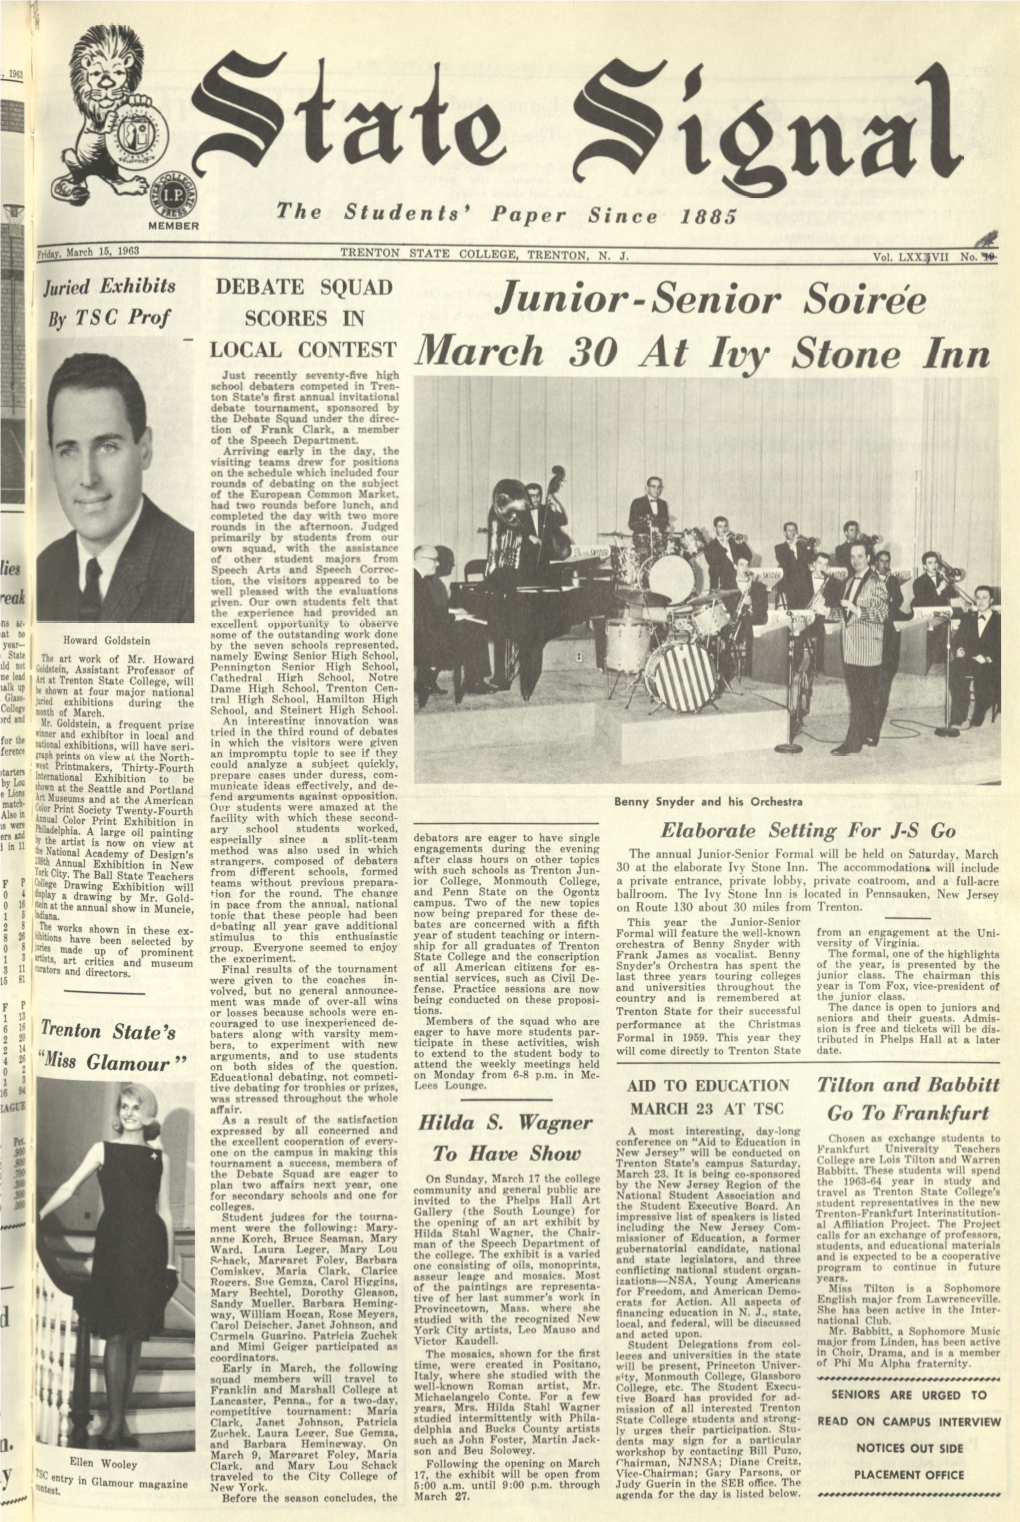 The Signal, Vol. 77, No. 19 (March 15, 1963)